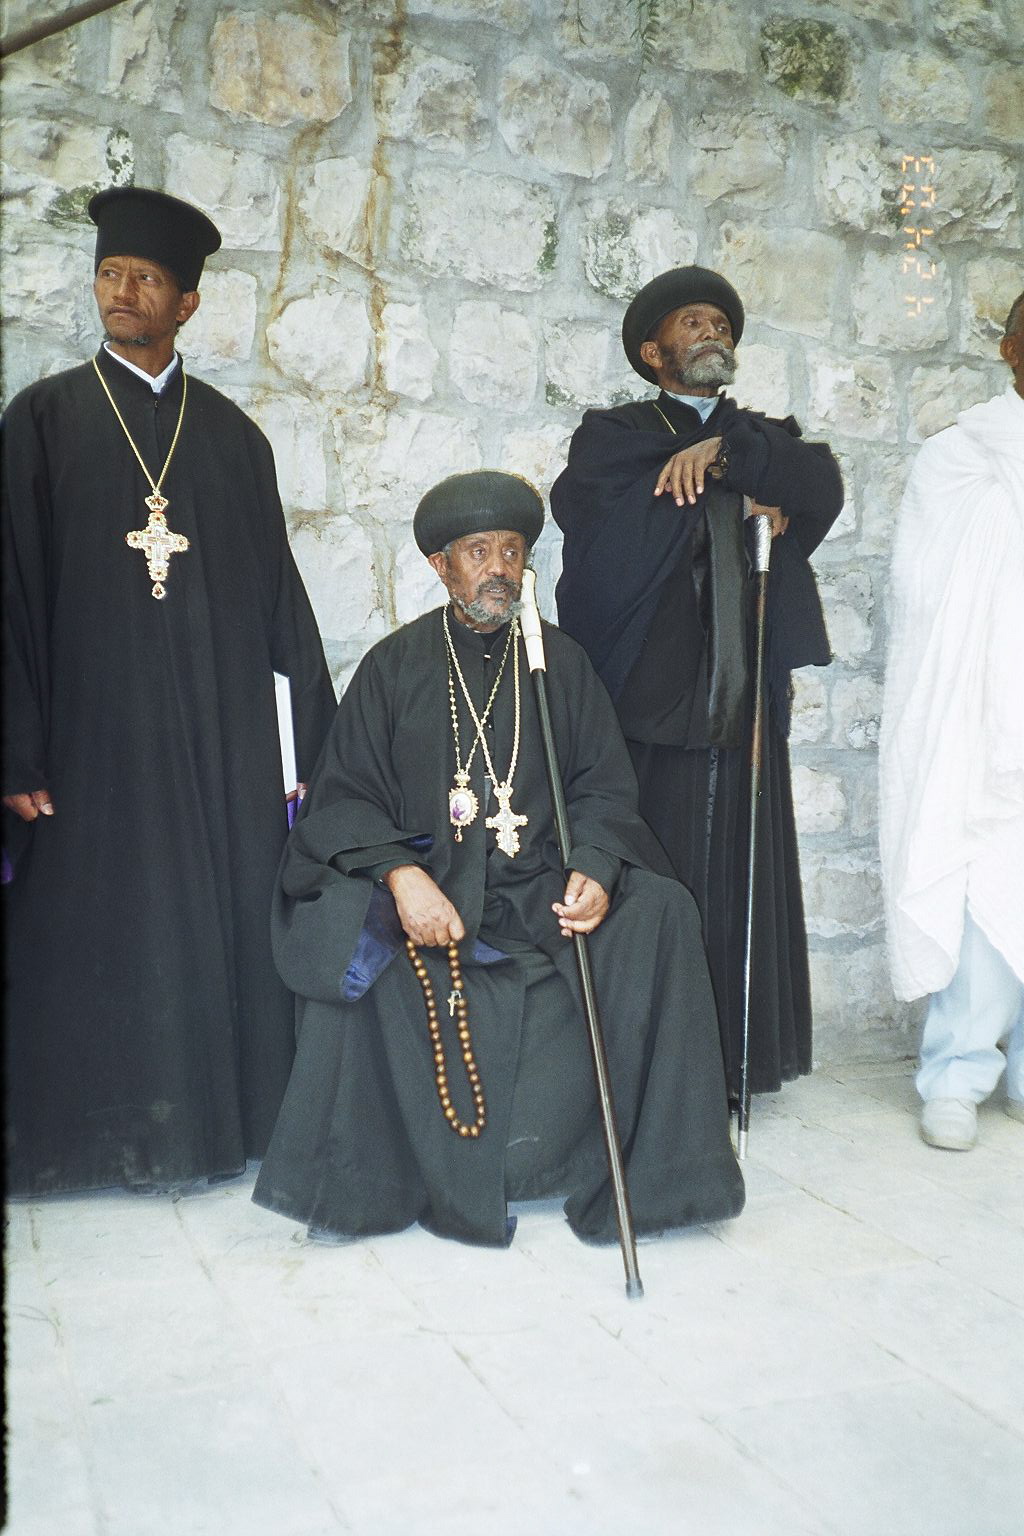 Ethiopianorthodoxpriests.JPG